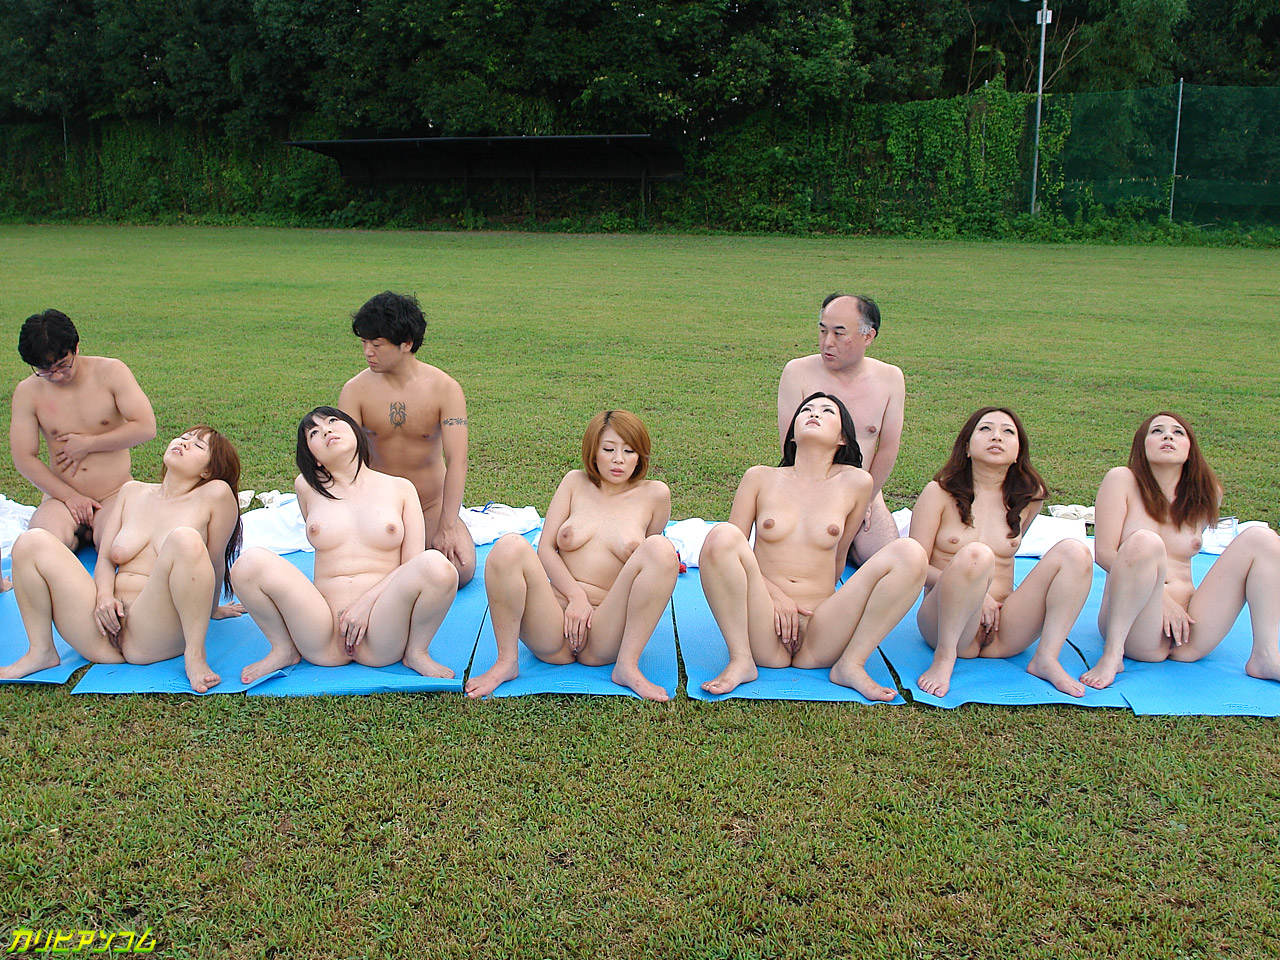 Kinky Asian girls tease with their asses and get rammed in an outdoor session 포르노 사진 #423605774 | Caribbeancom Pics, Ai, Ami, Eri, Kohaku, Maeshima, Makino, Miyazaki, Mizushima, Murase, Reira, Sawakita, Serikawa, Uta, Yuka, Yuma, Japanese, 모바일 포르노